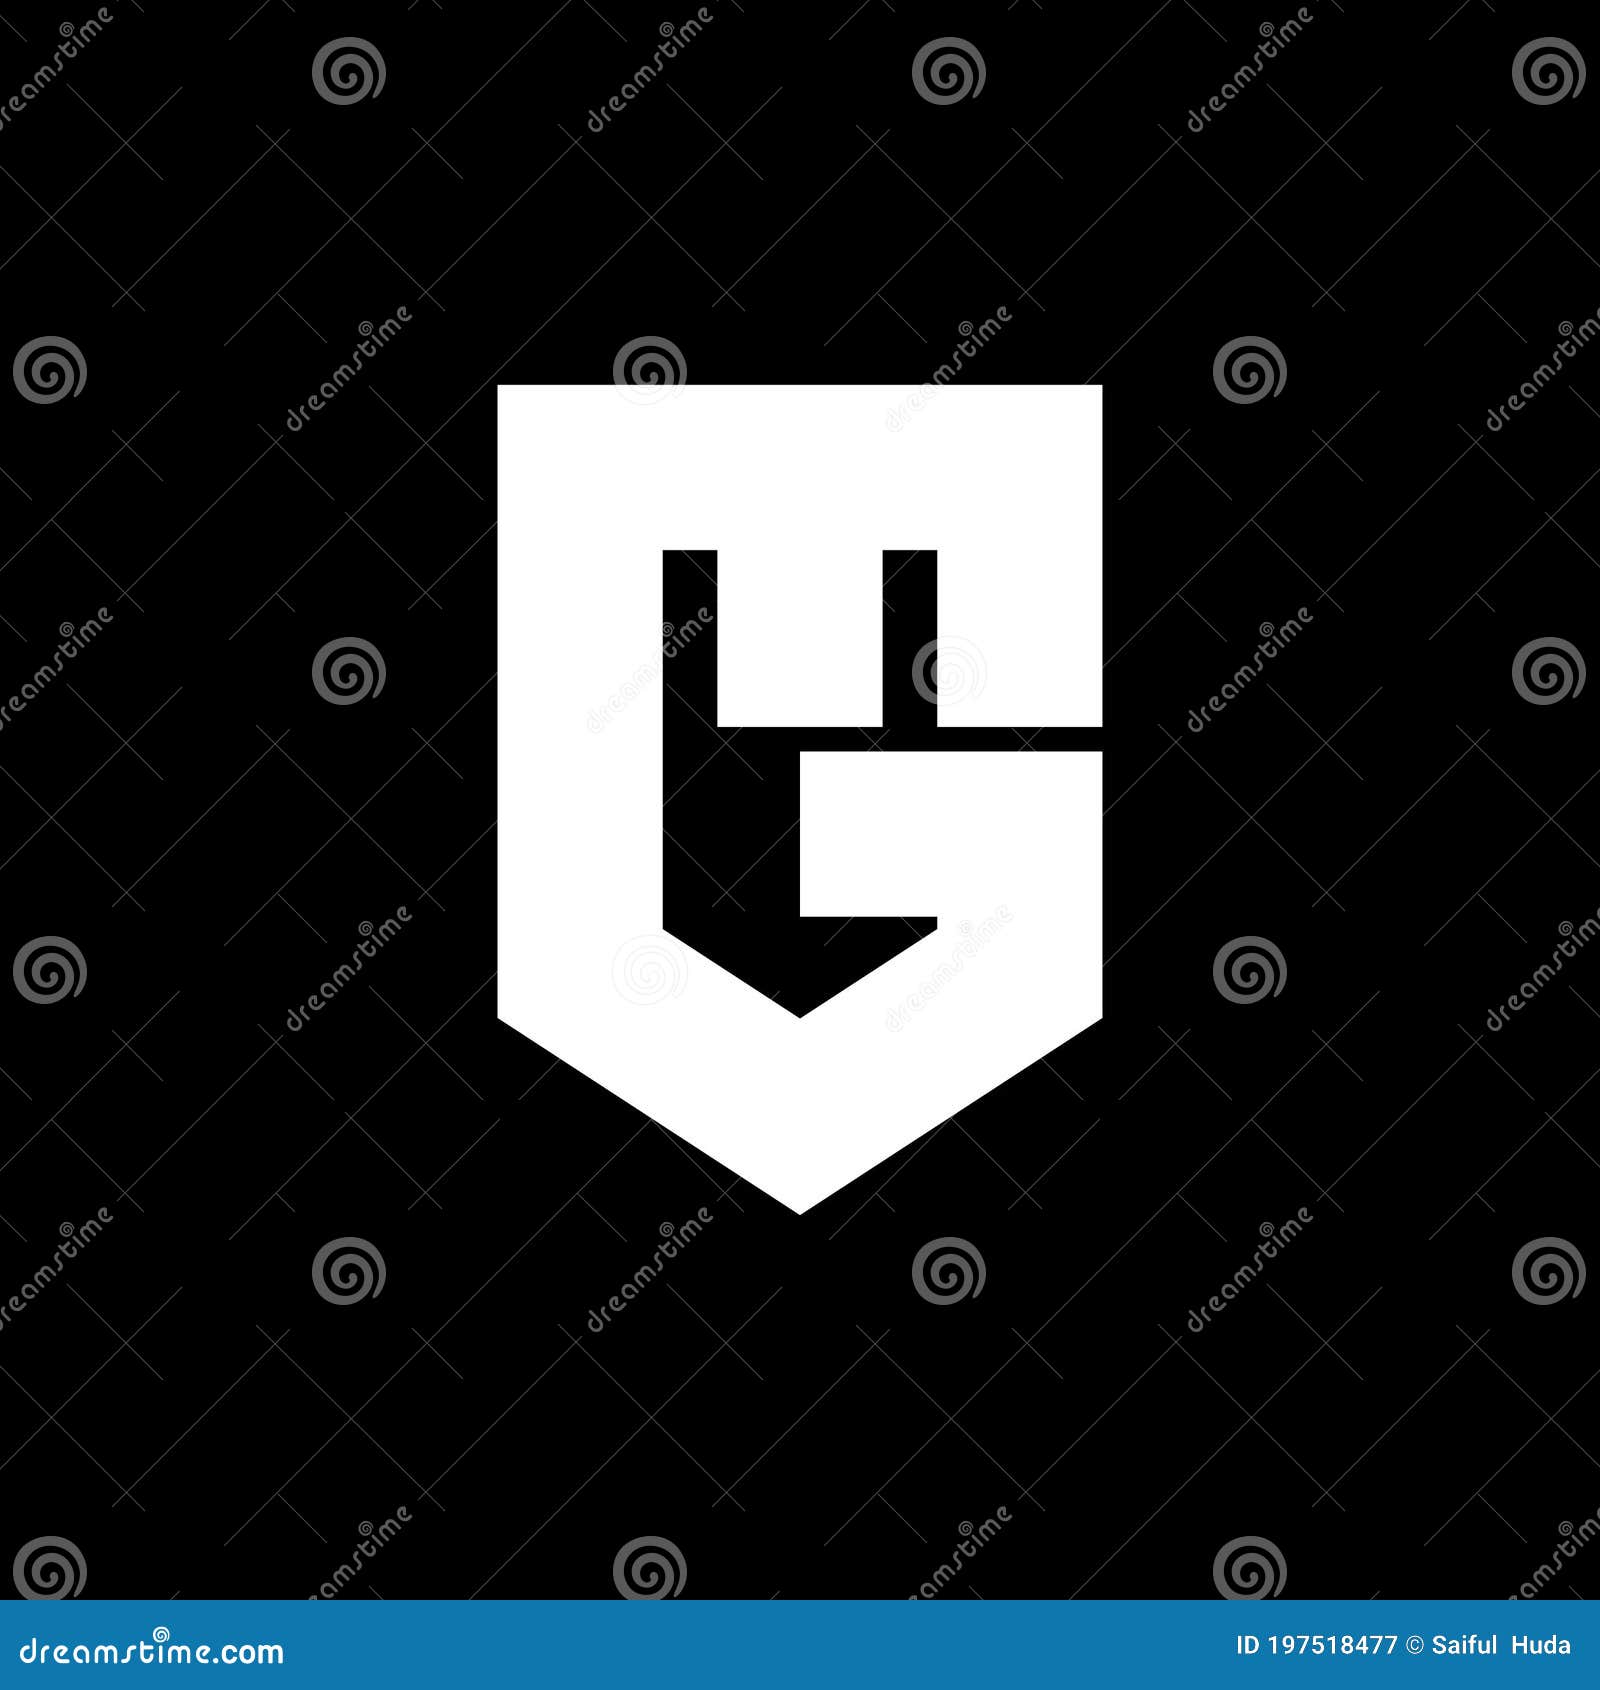 Letter GM Simple Monogram Logo Icon Design. Stock Vector - Illustration of  industry, element: 197334391